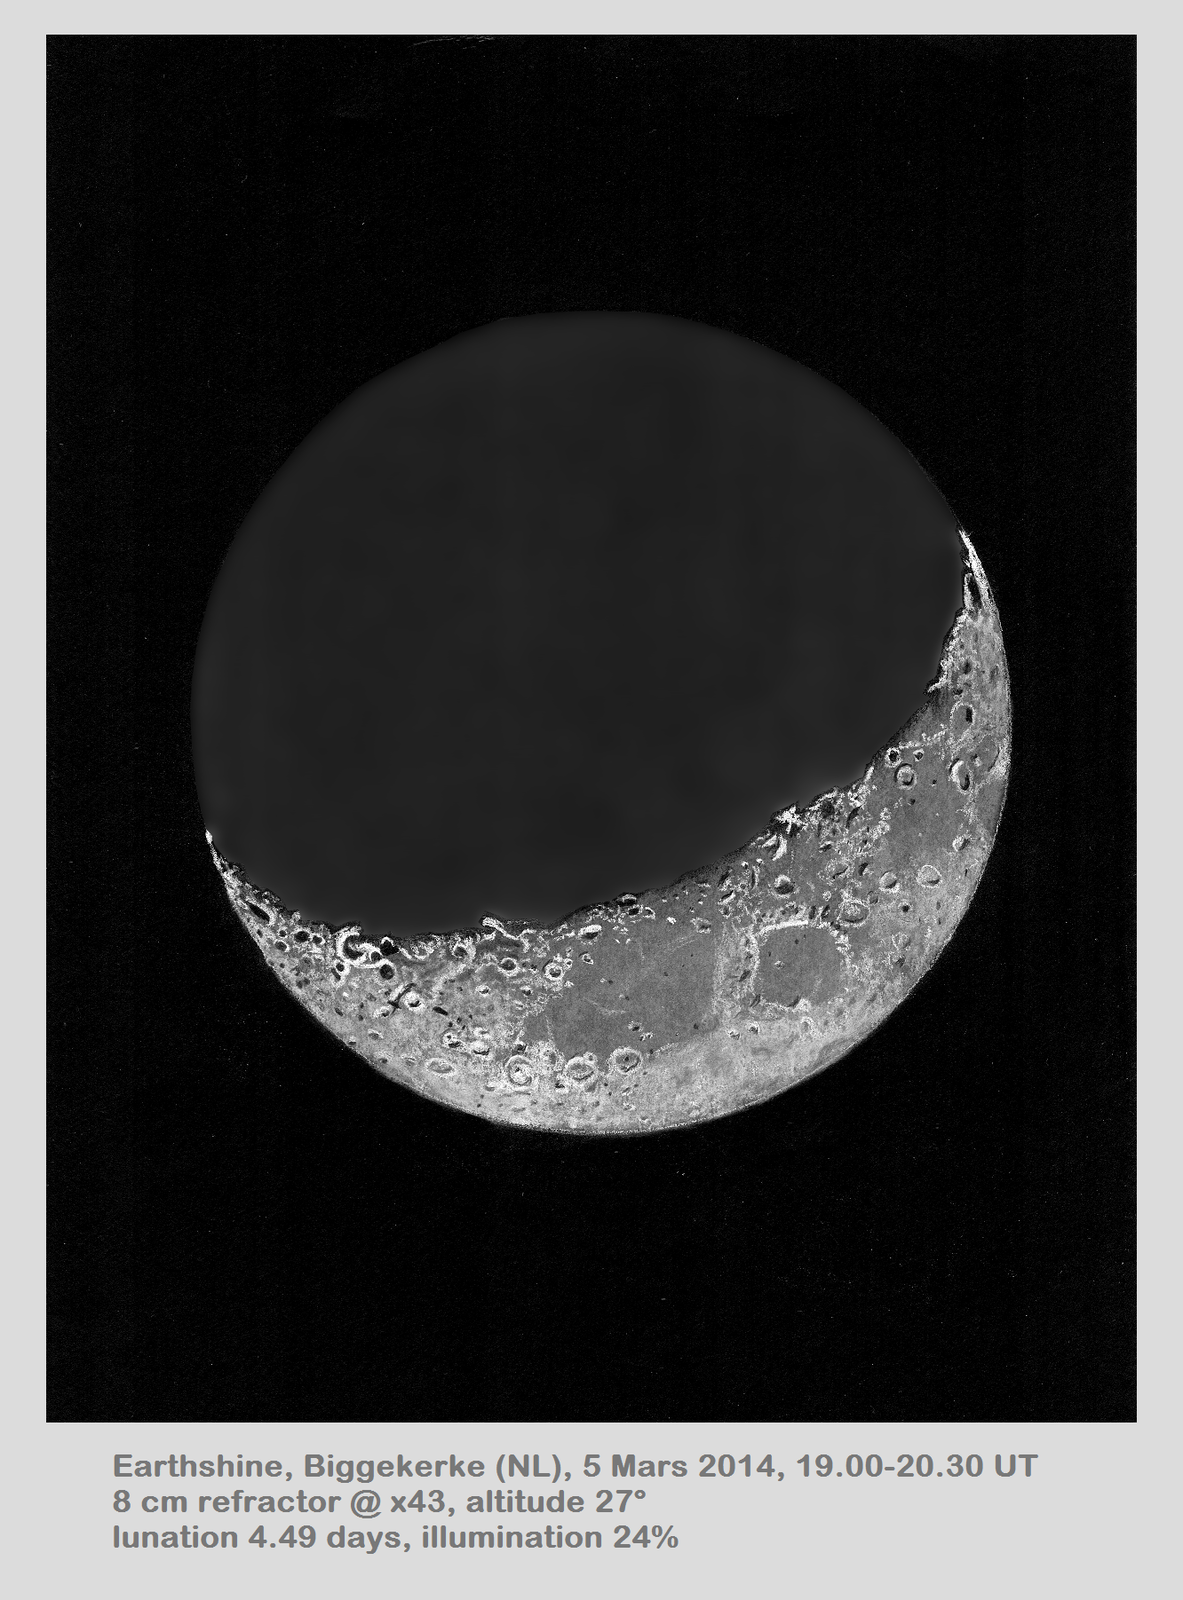 Lunar 002: Earthshine (twice reflected sunlight)